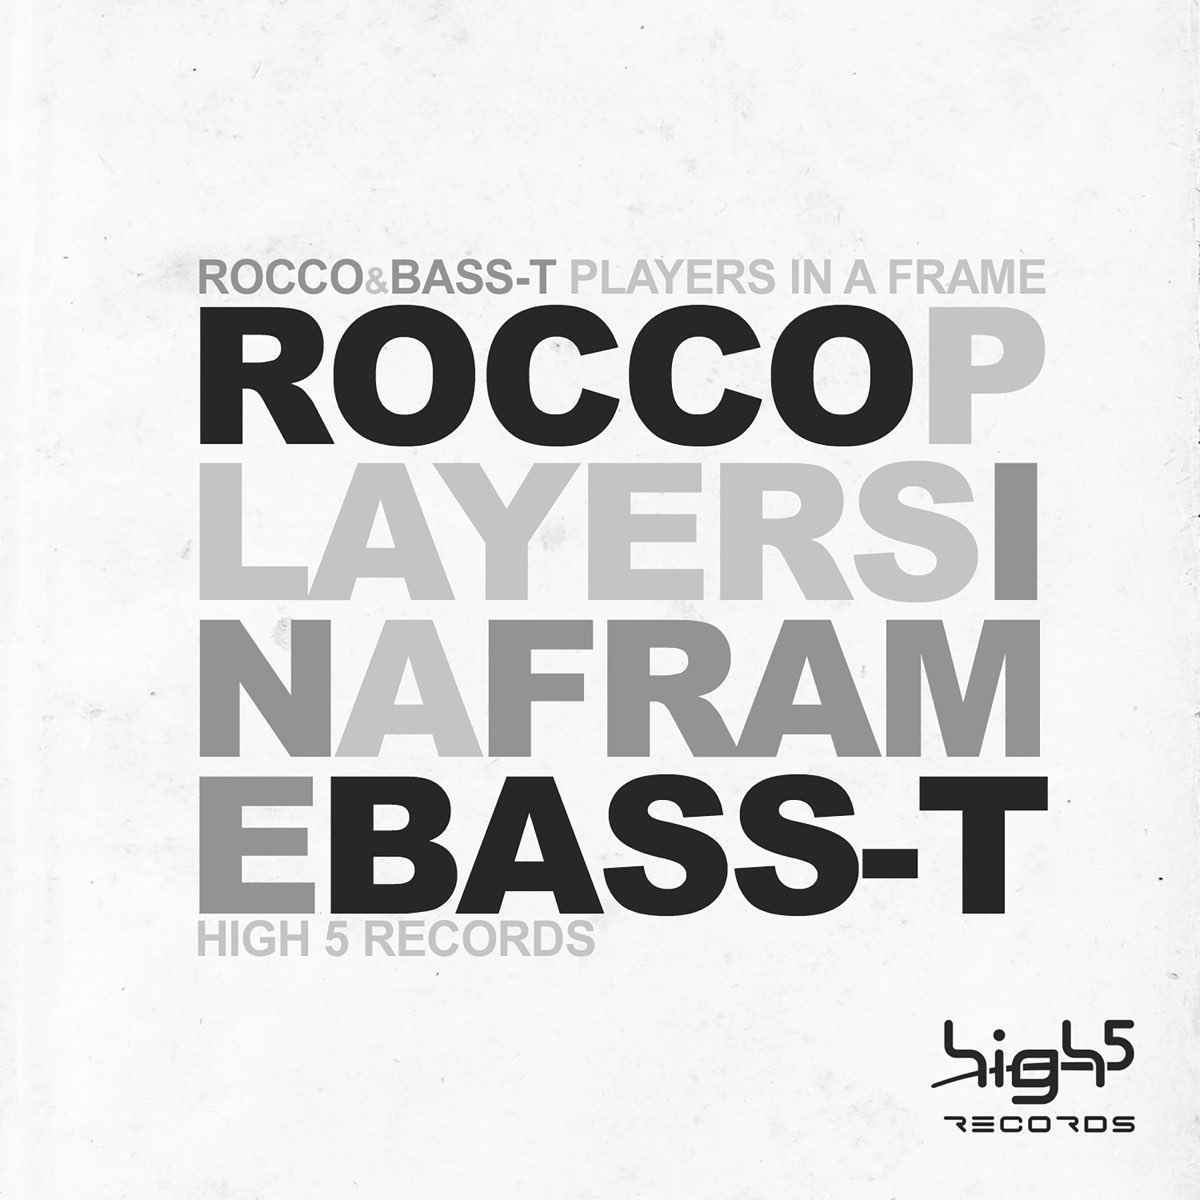 Rocco bass t